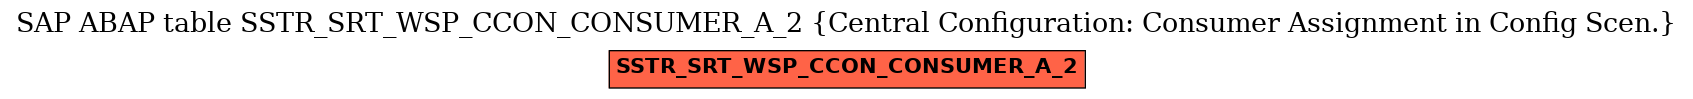 E-R Diagram for table SSTR_SRT_WSP_CCON_CONSUMER_A_2 (Central Configuration: Consumer Assignment in Config Scen.)